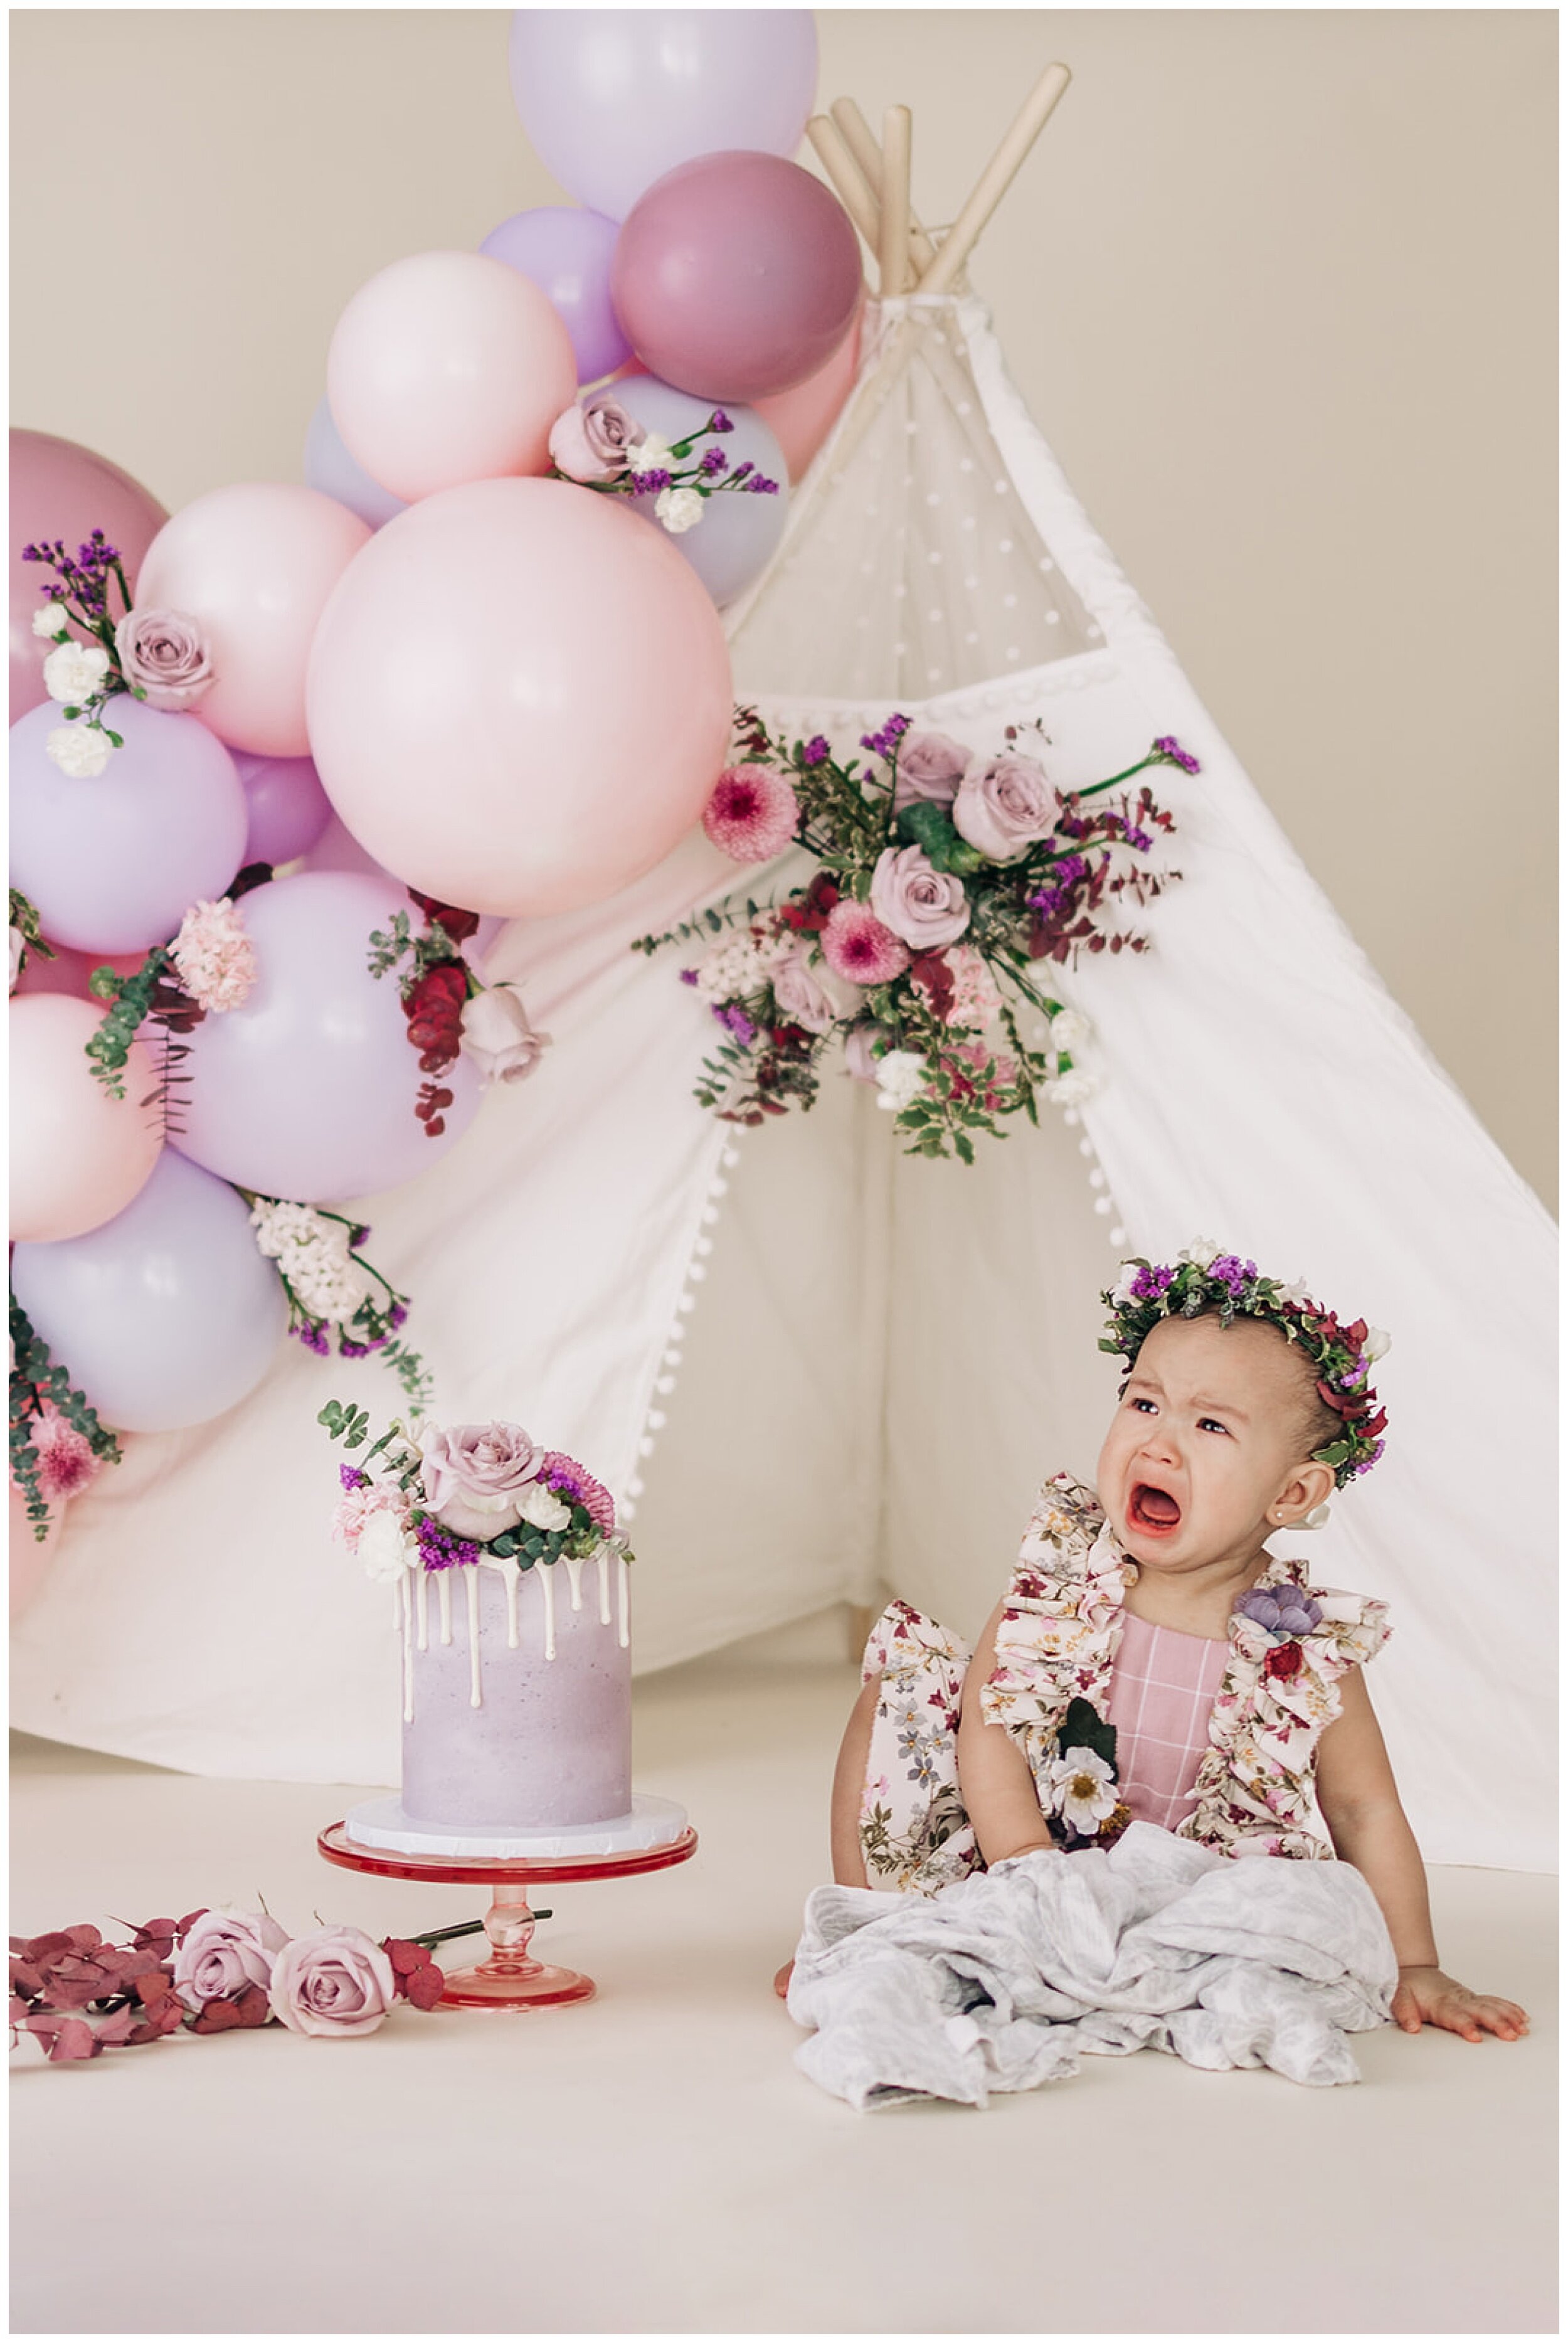 Fun First Birthday Ideas: A Girly Teepee First Birthday Photoshoot! — Rhea Ashlynn Photography